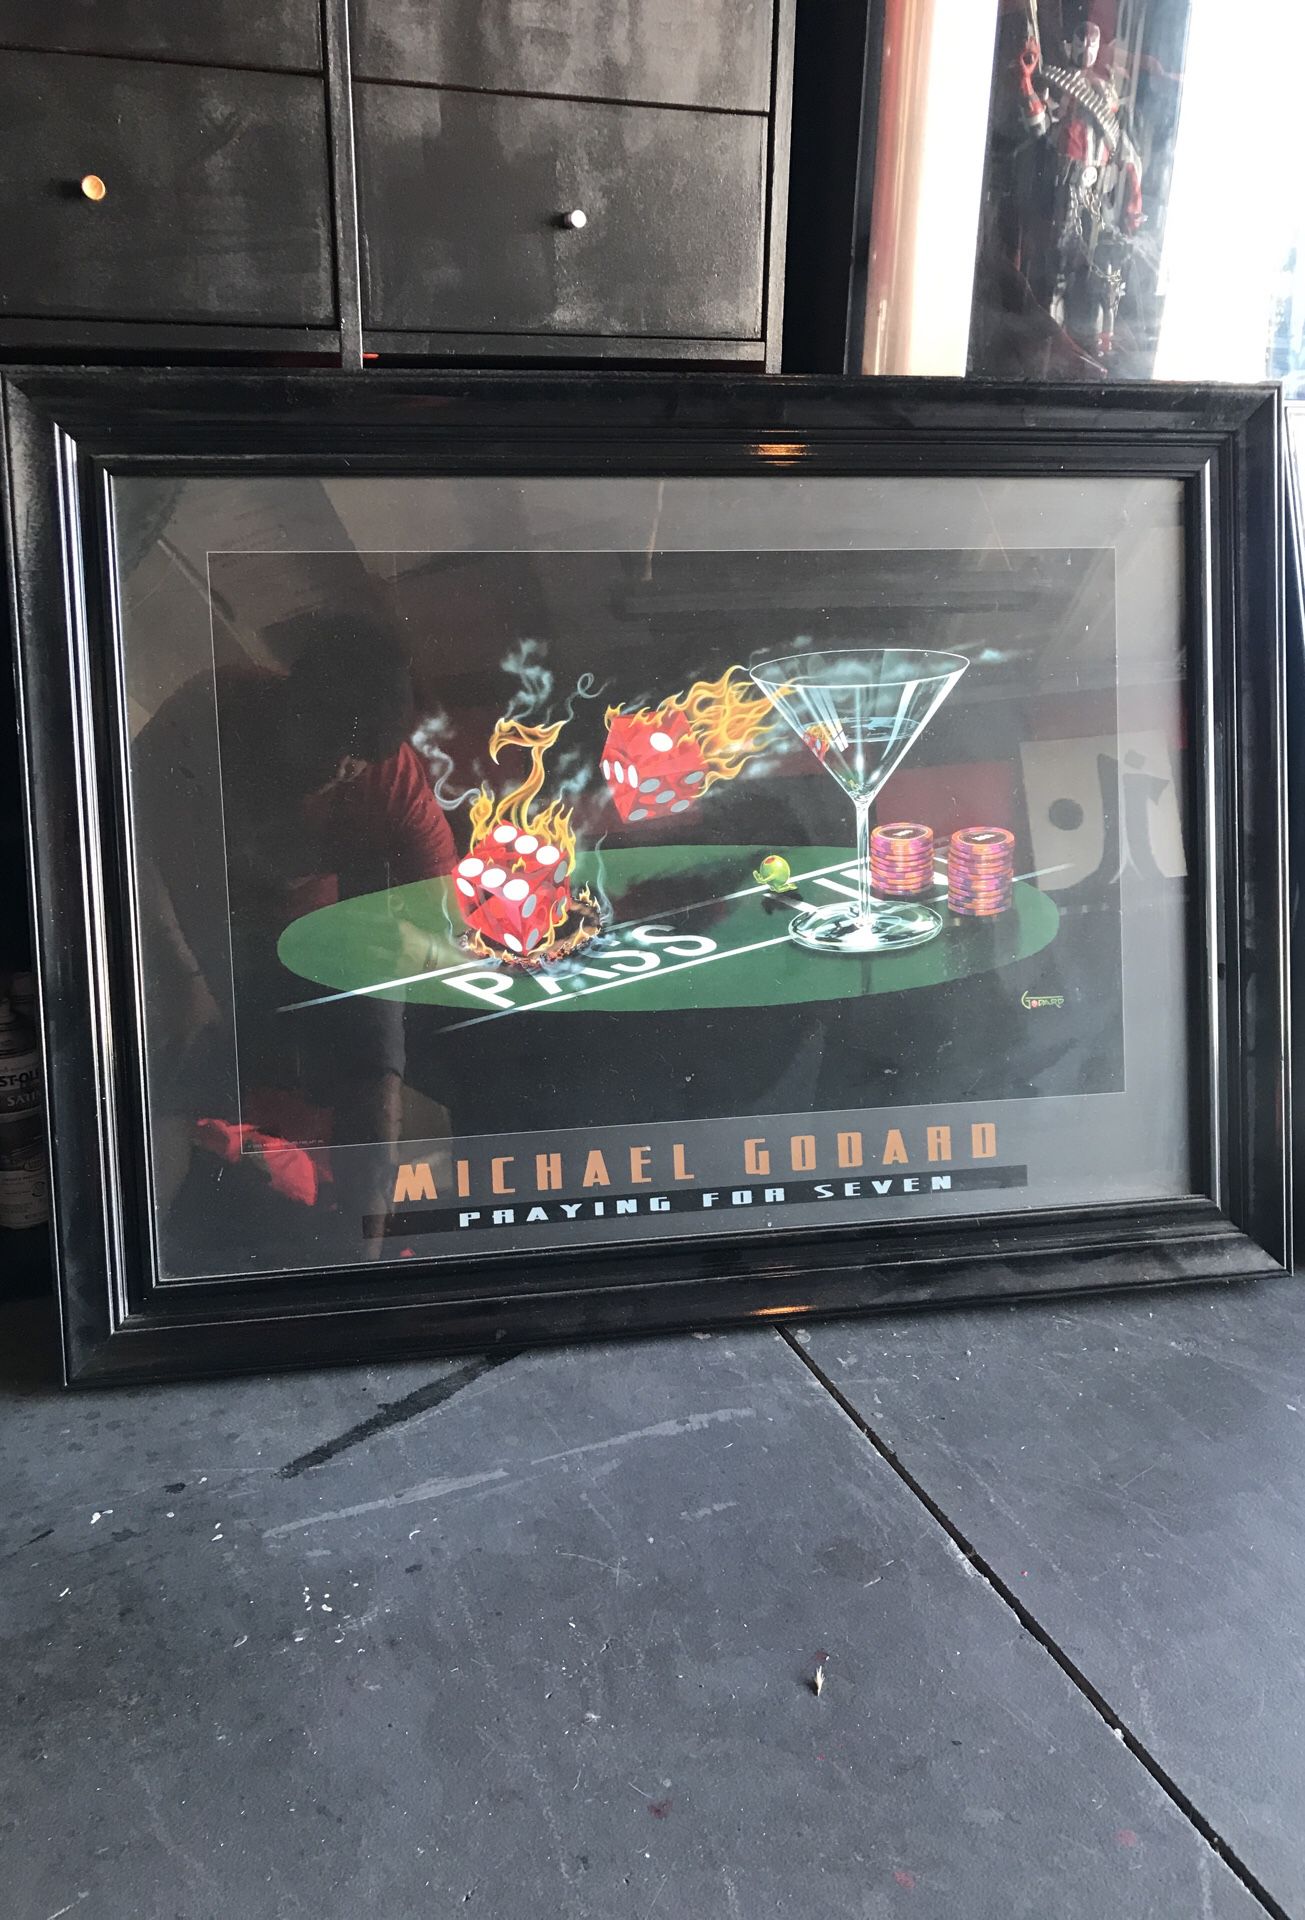 Michael Godard picture frames